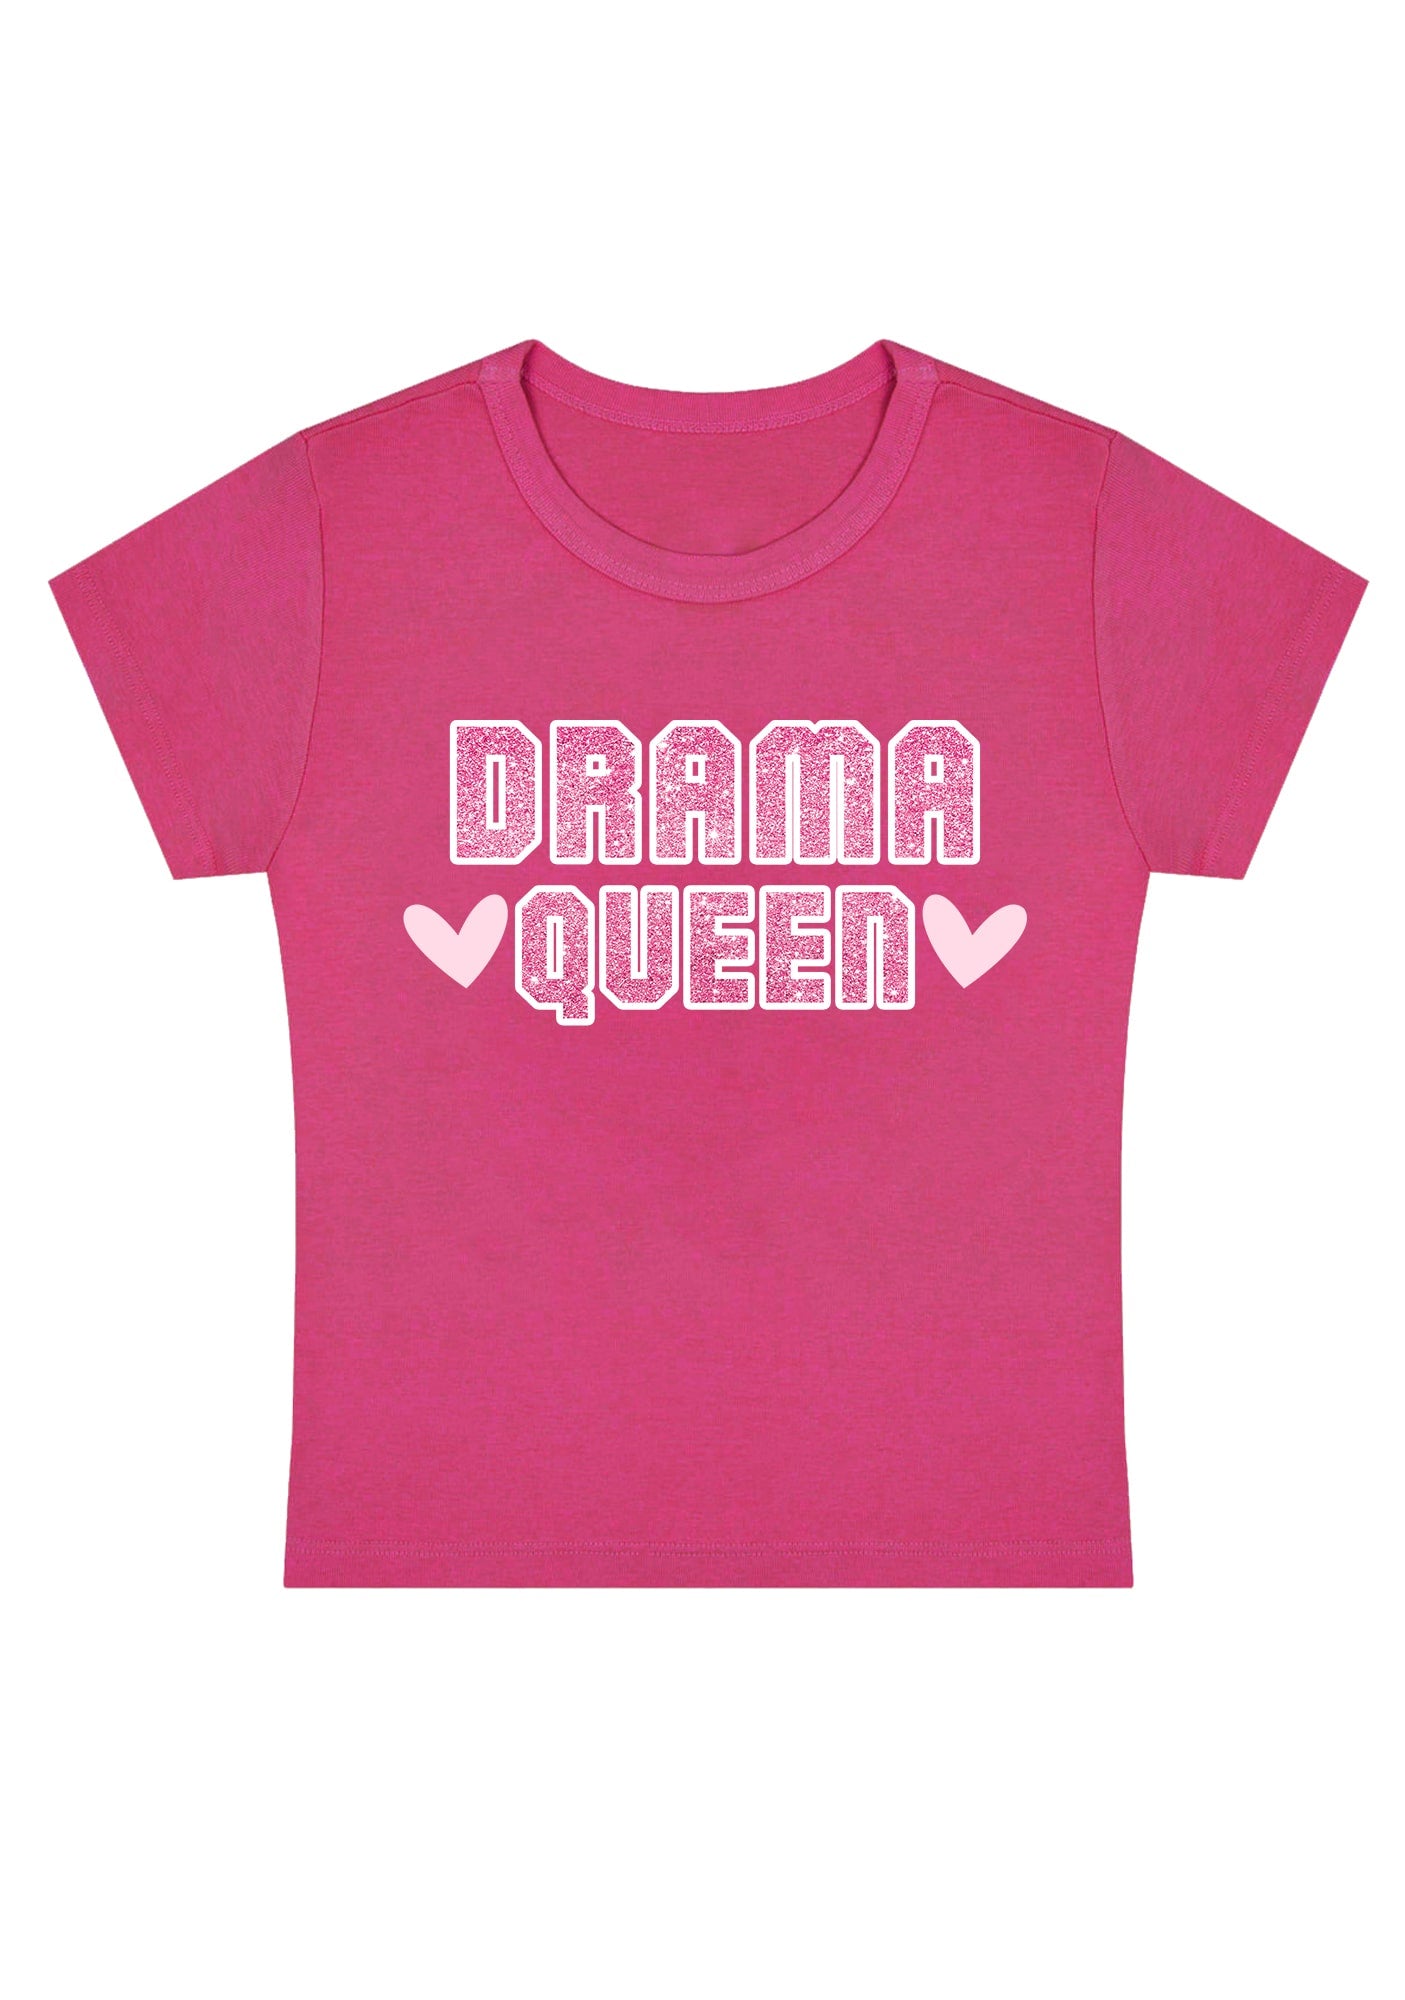 Curvy Drama Queen Baby Tee